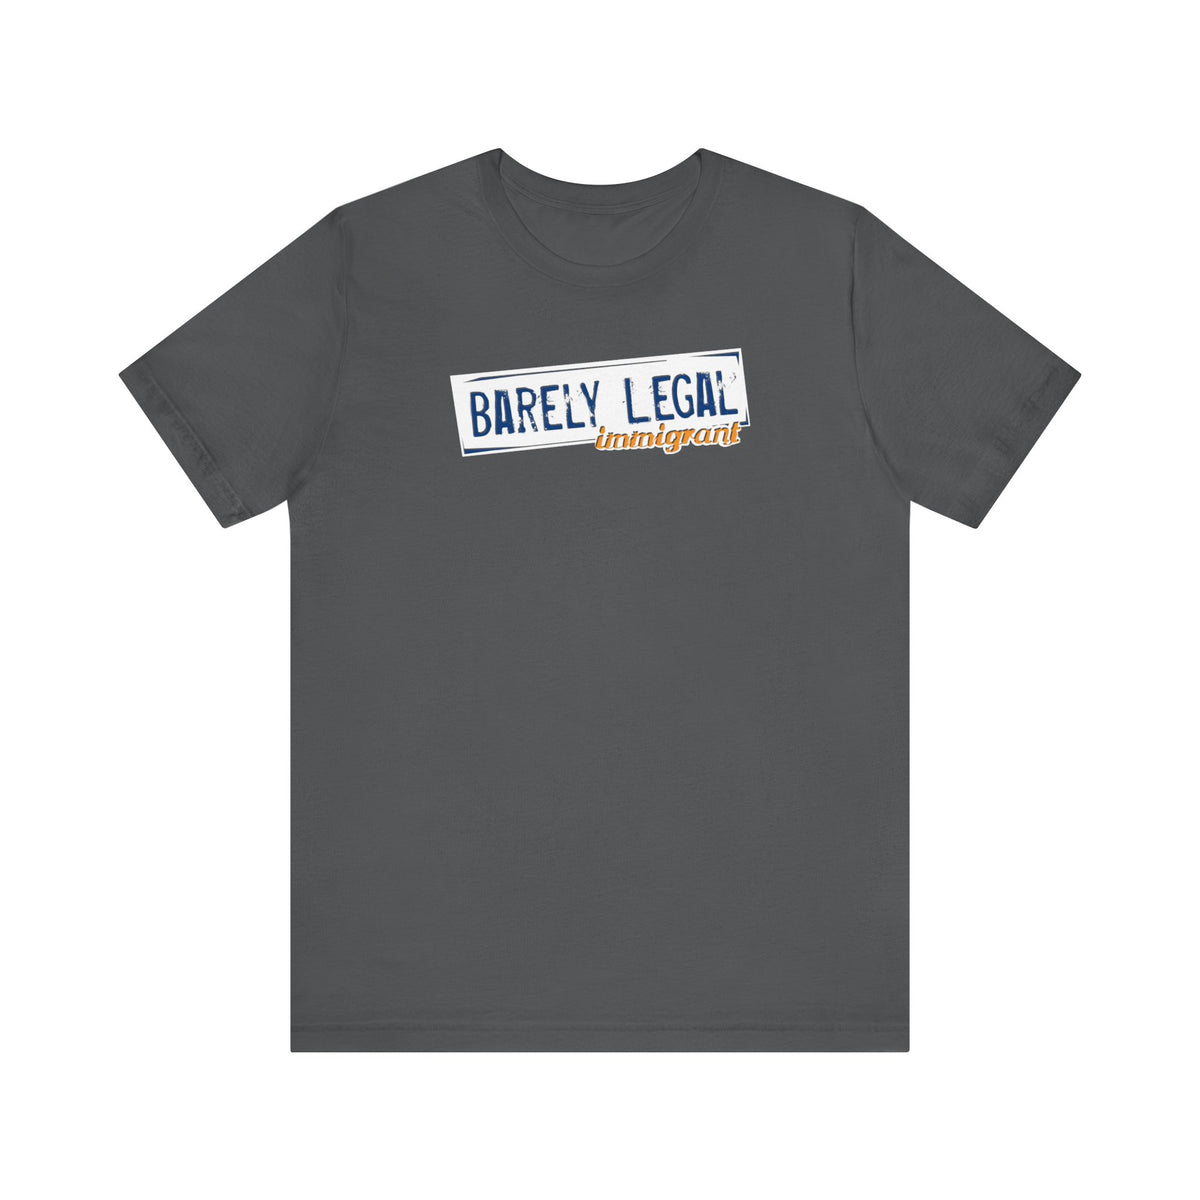 Barely Legal Immigrant  - Men's T-Shirt